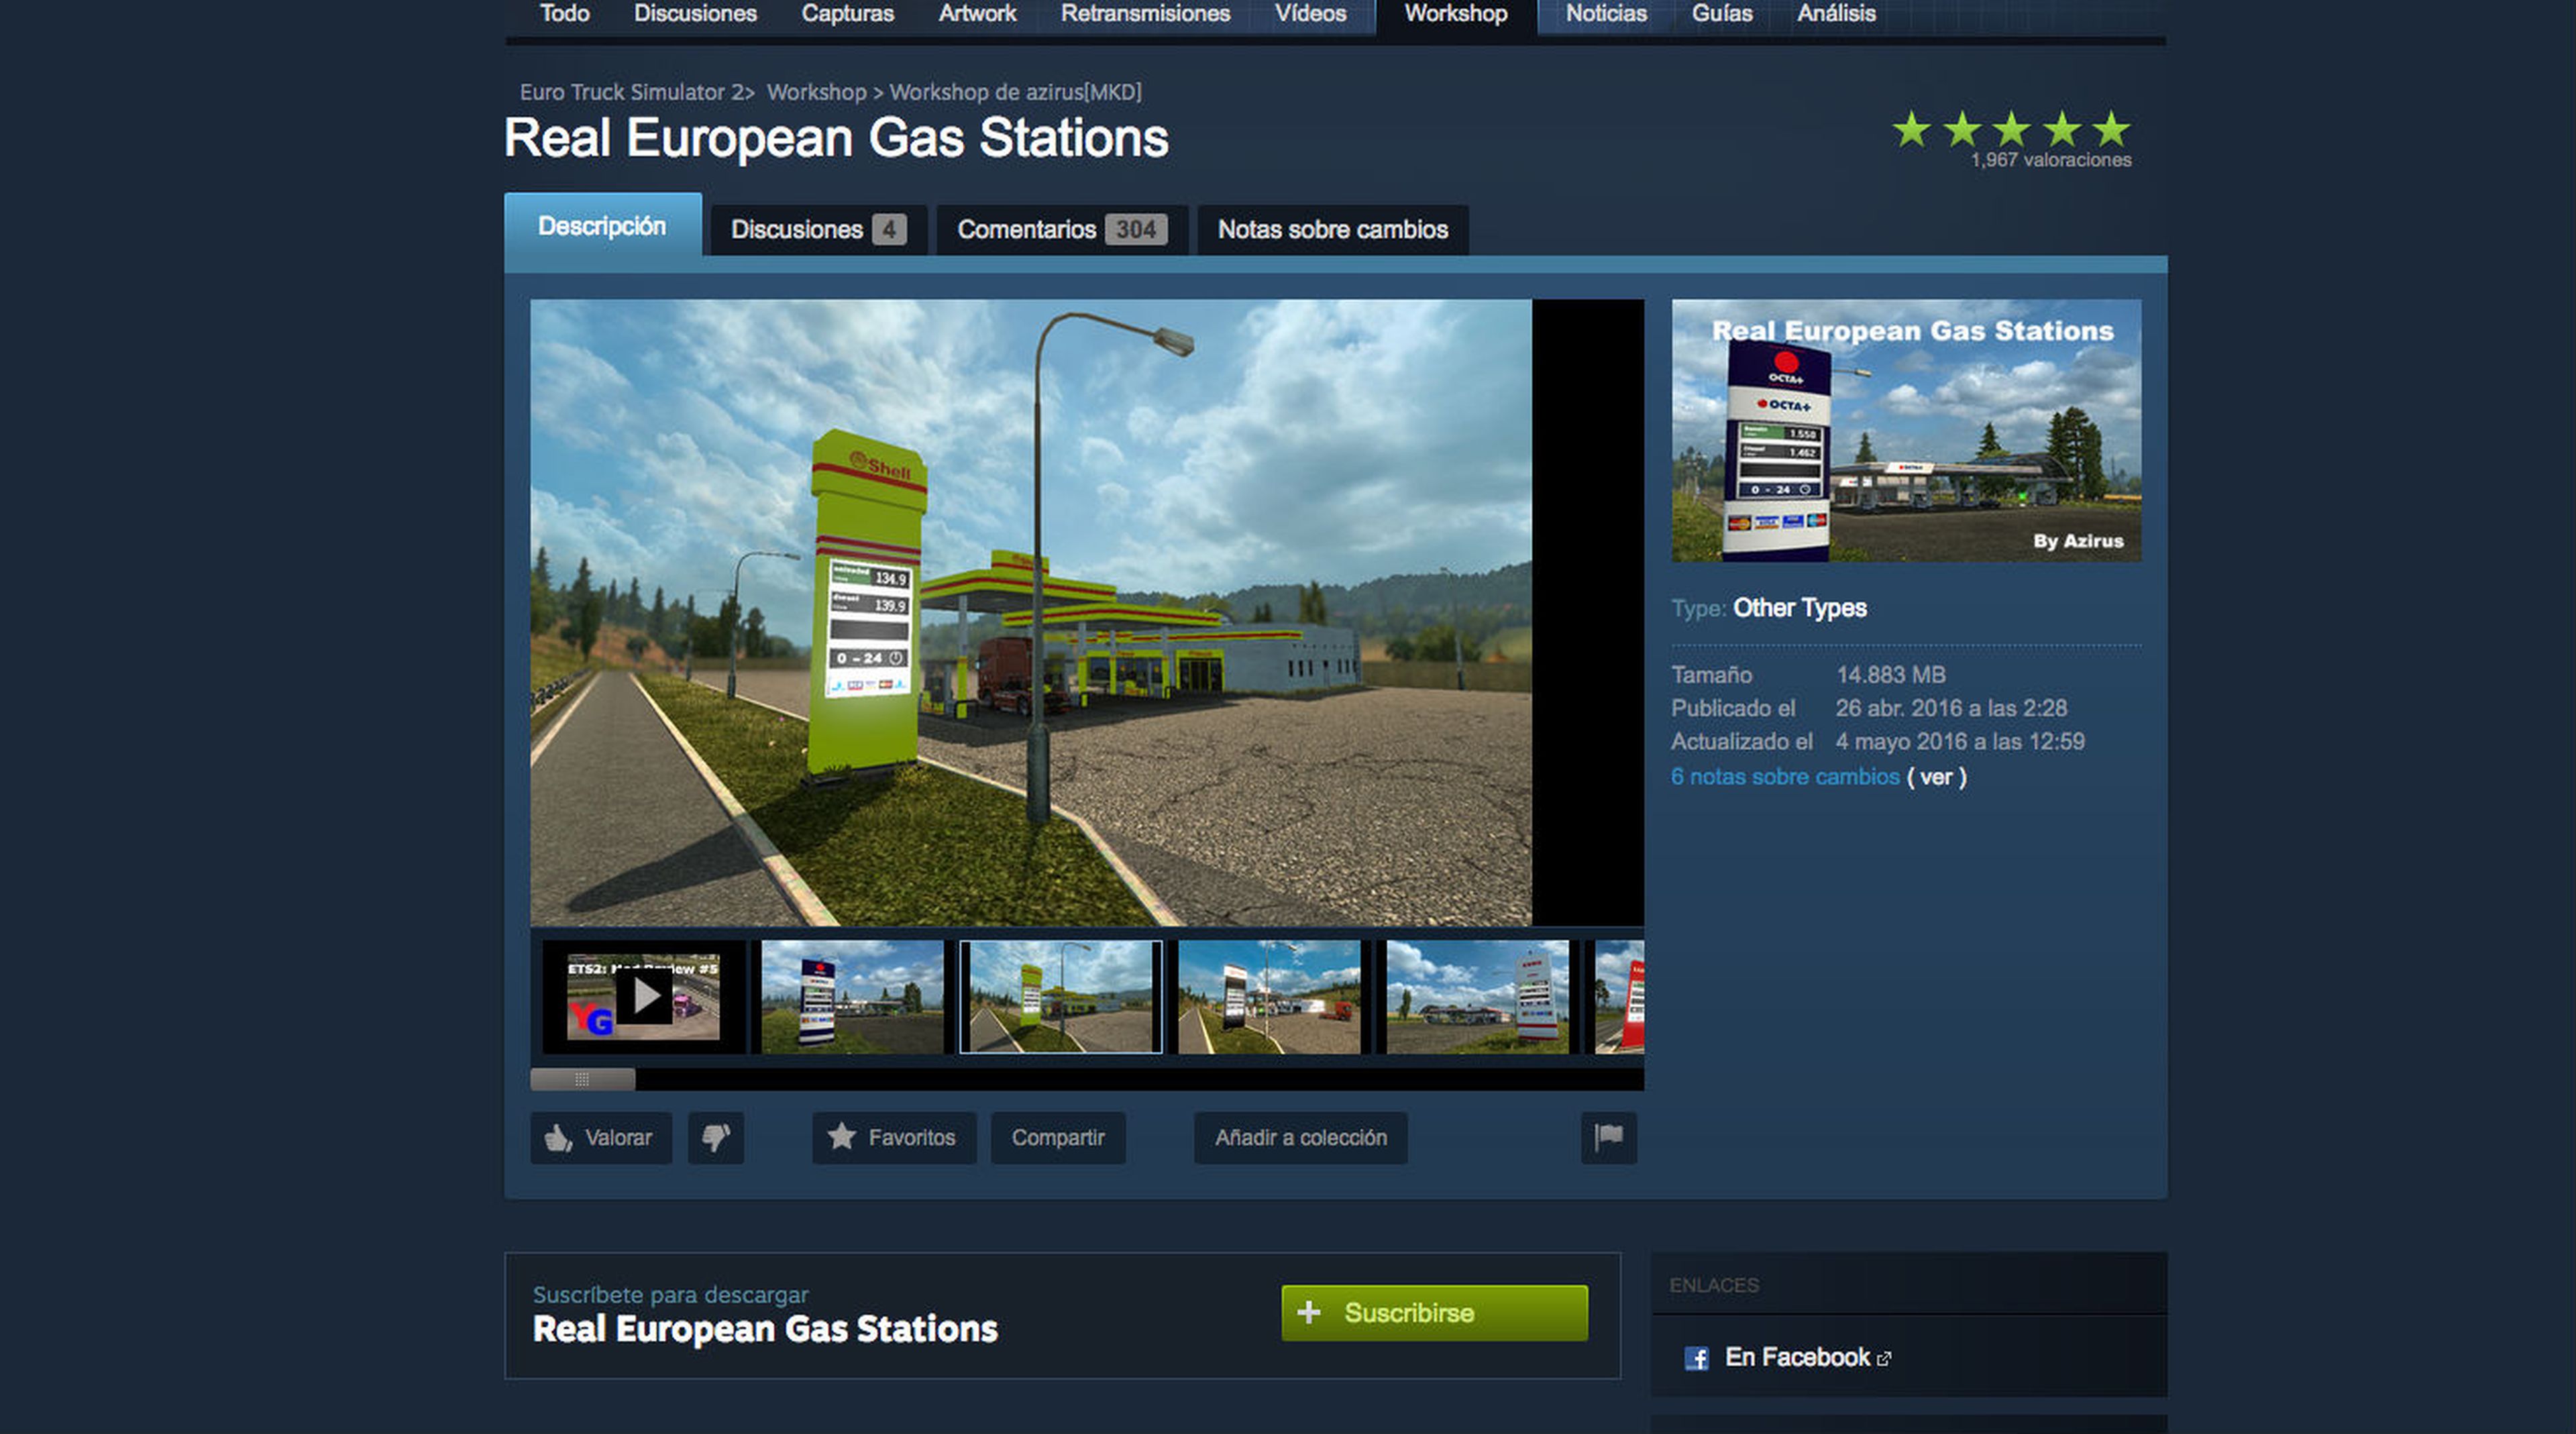 Steam Workshop Mods de Euro Truck Simulator 2